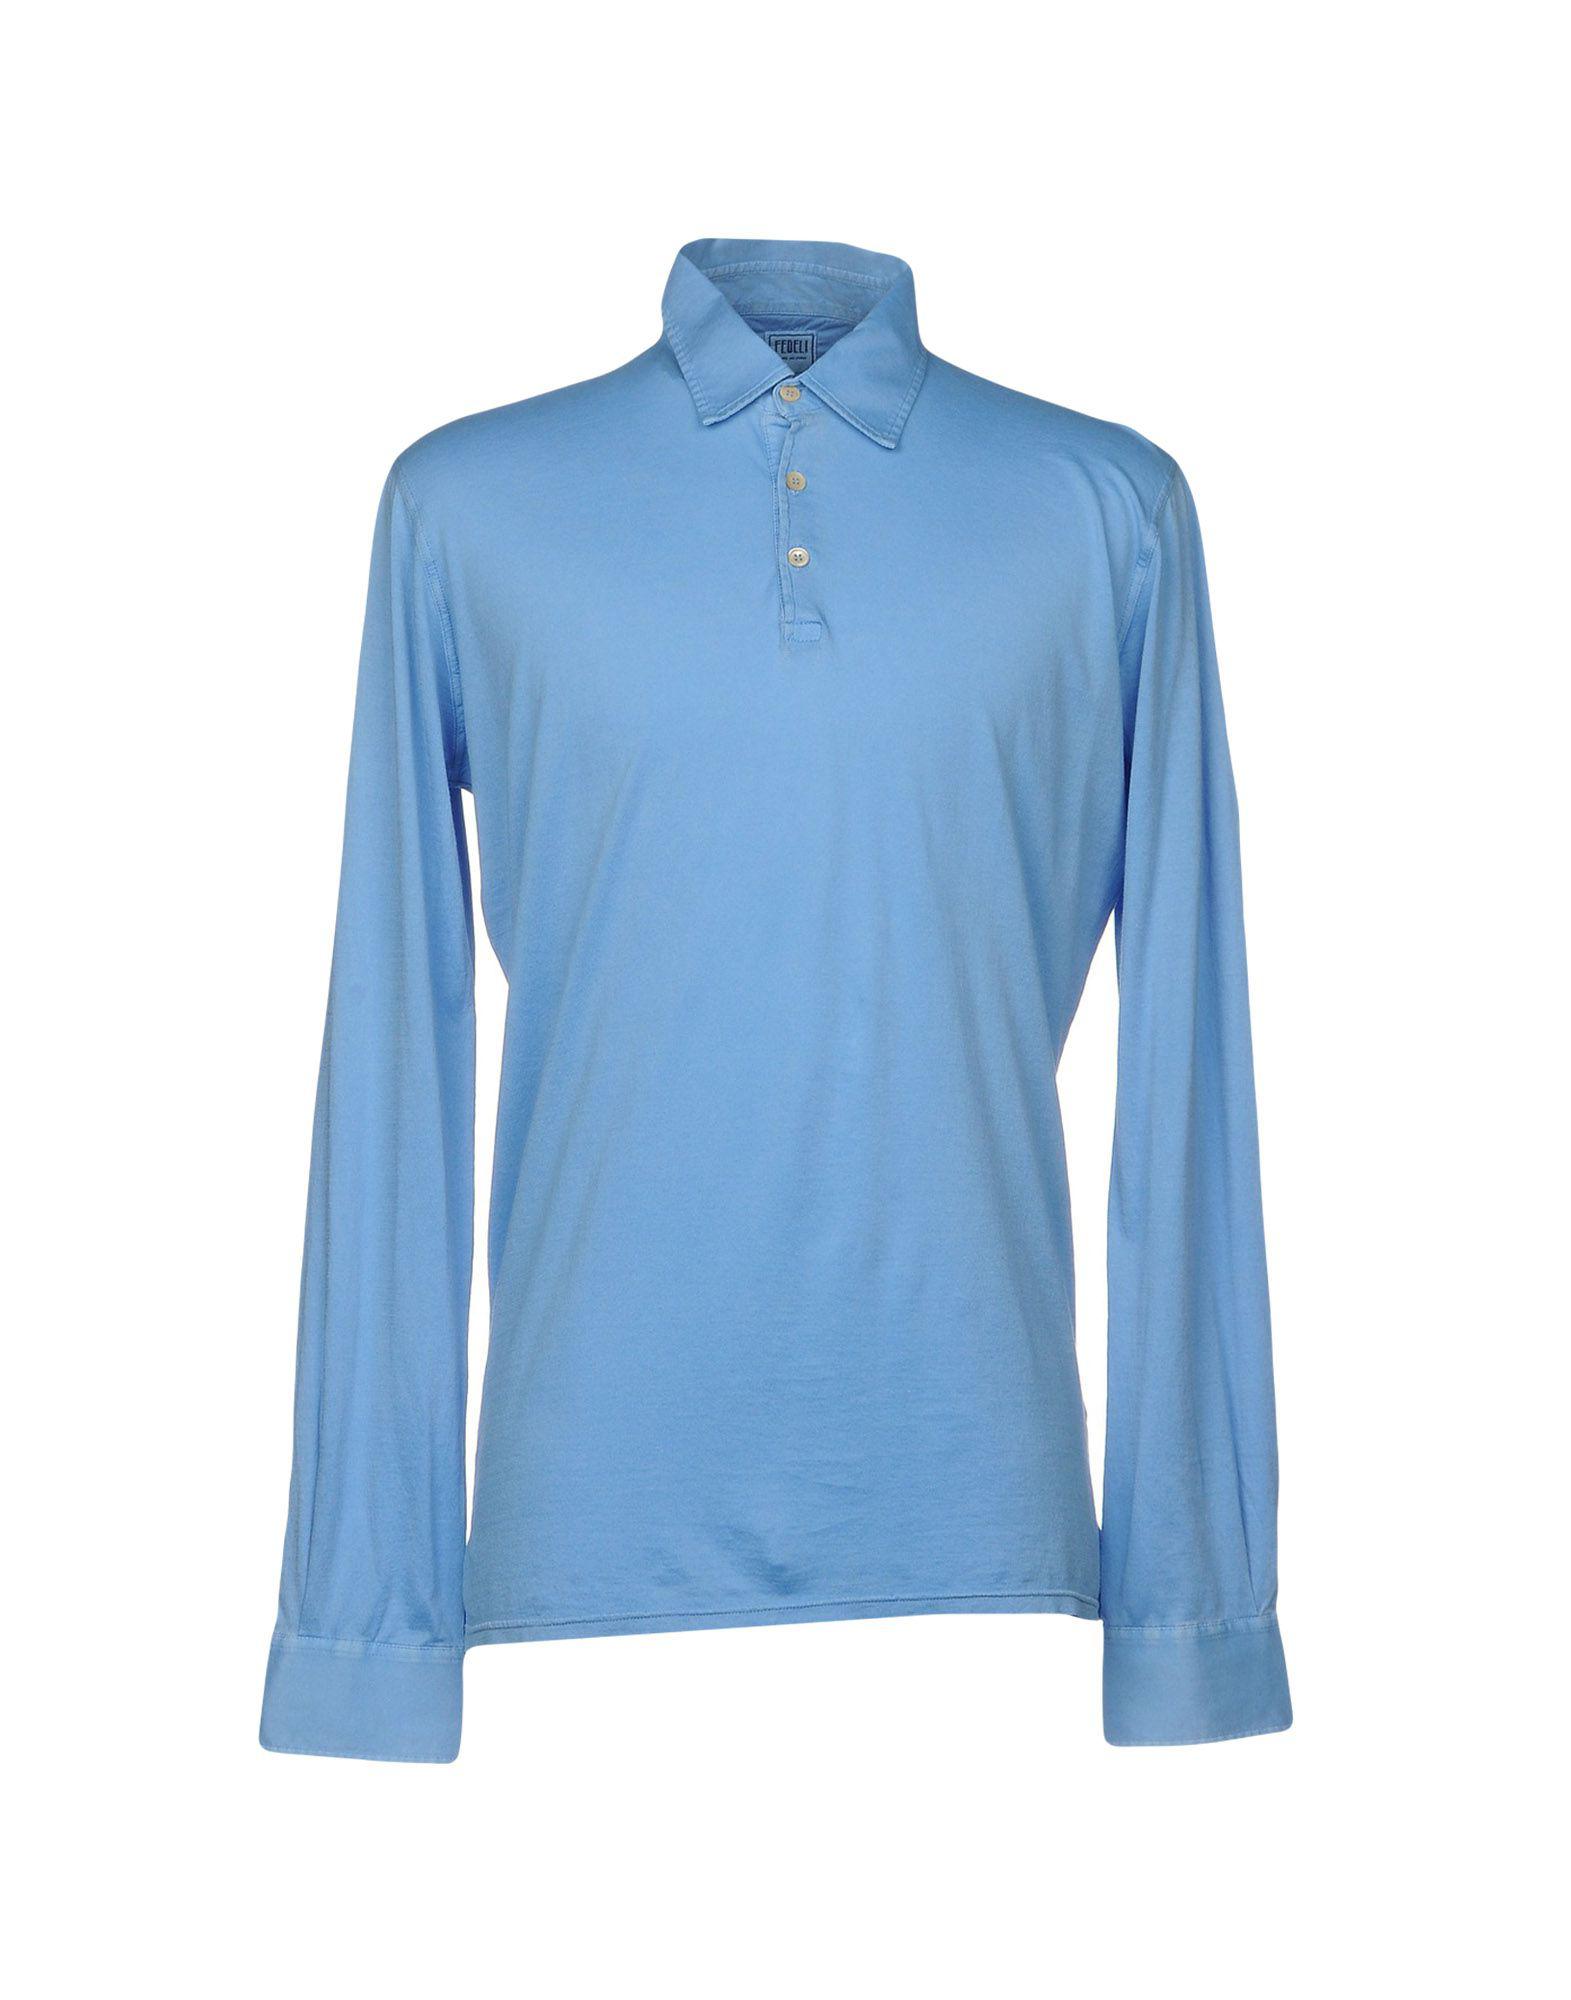 Fedeli Cotton Polo Shirt in Sky Blue (Blue) for Men - Lyst